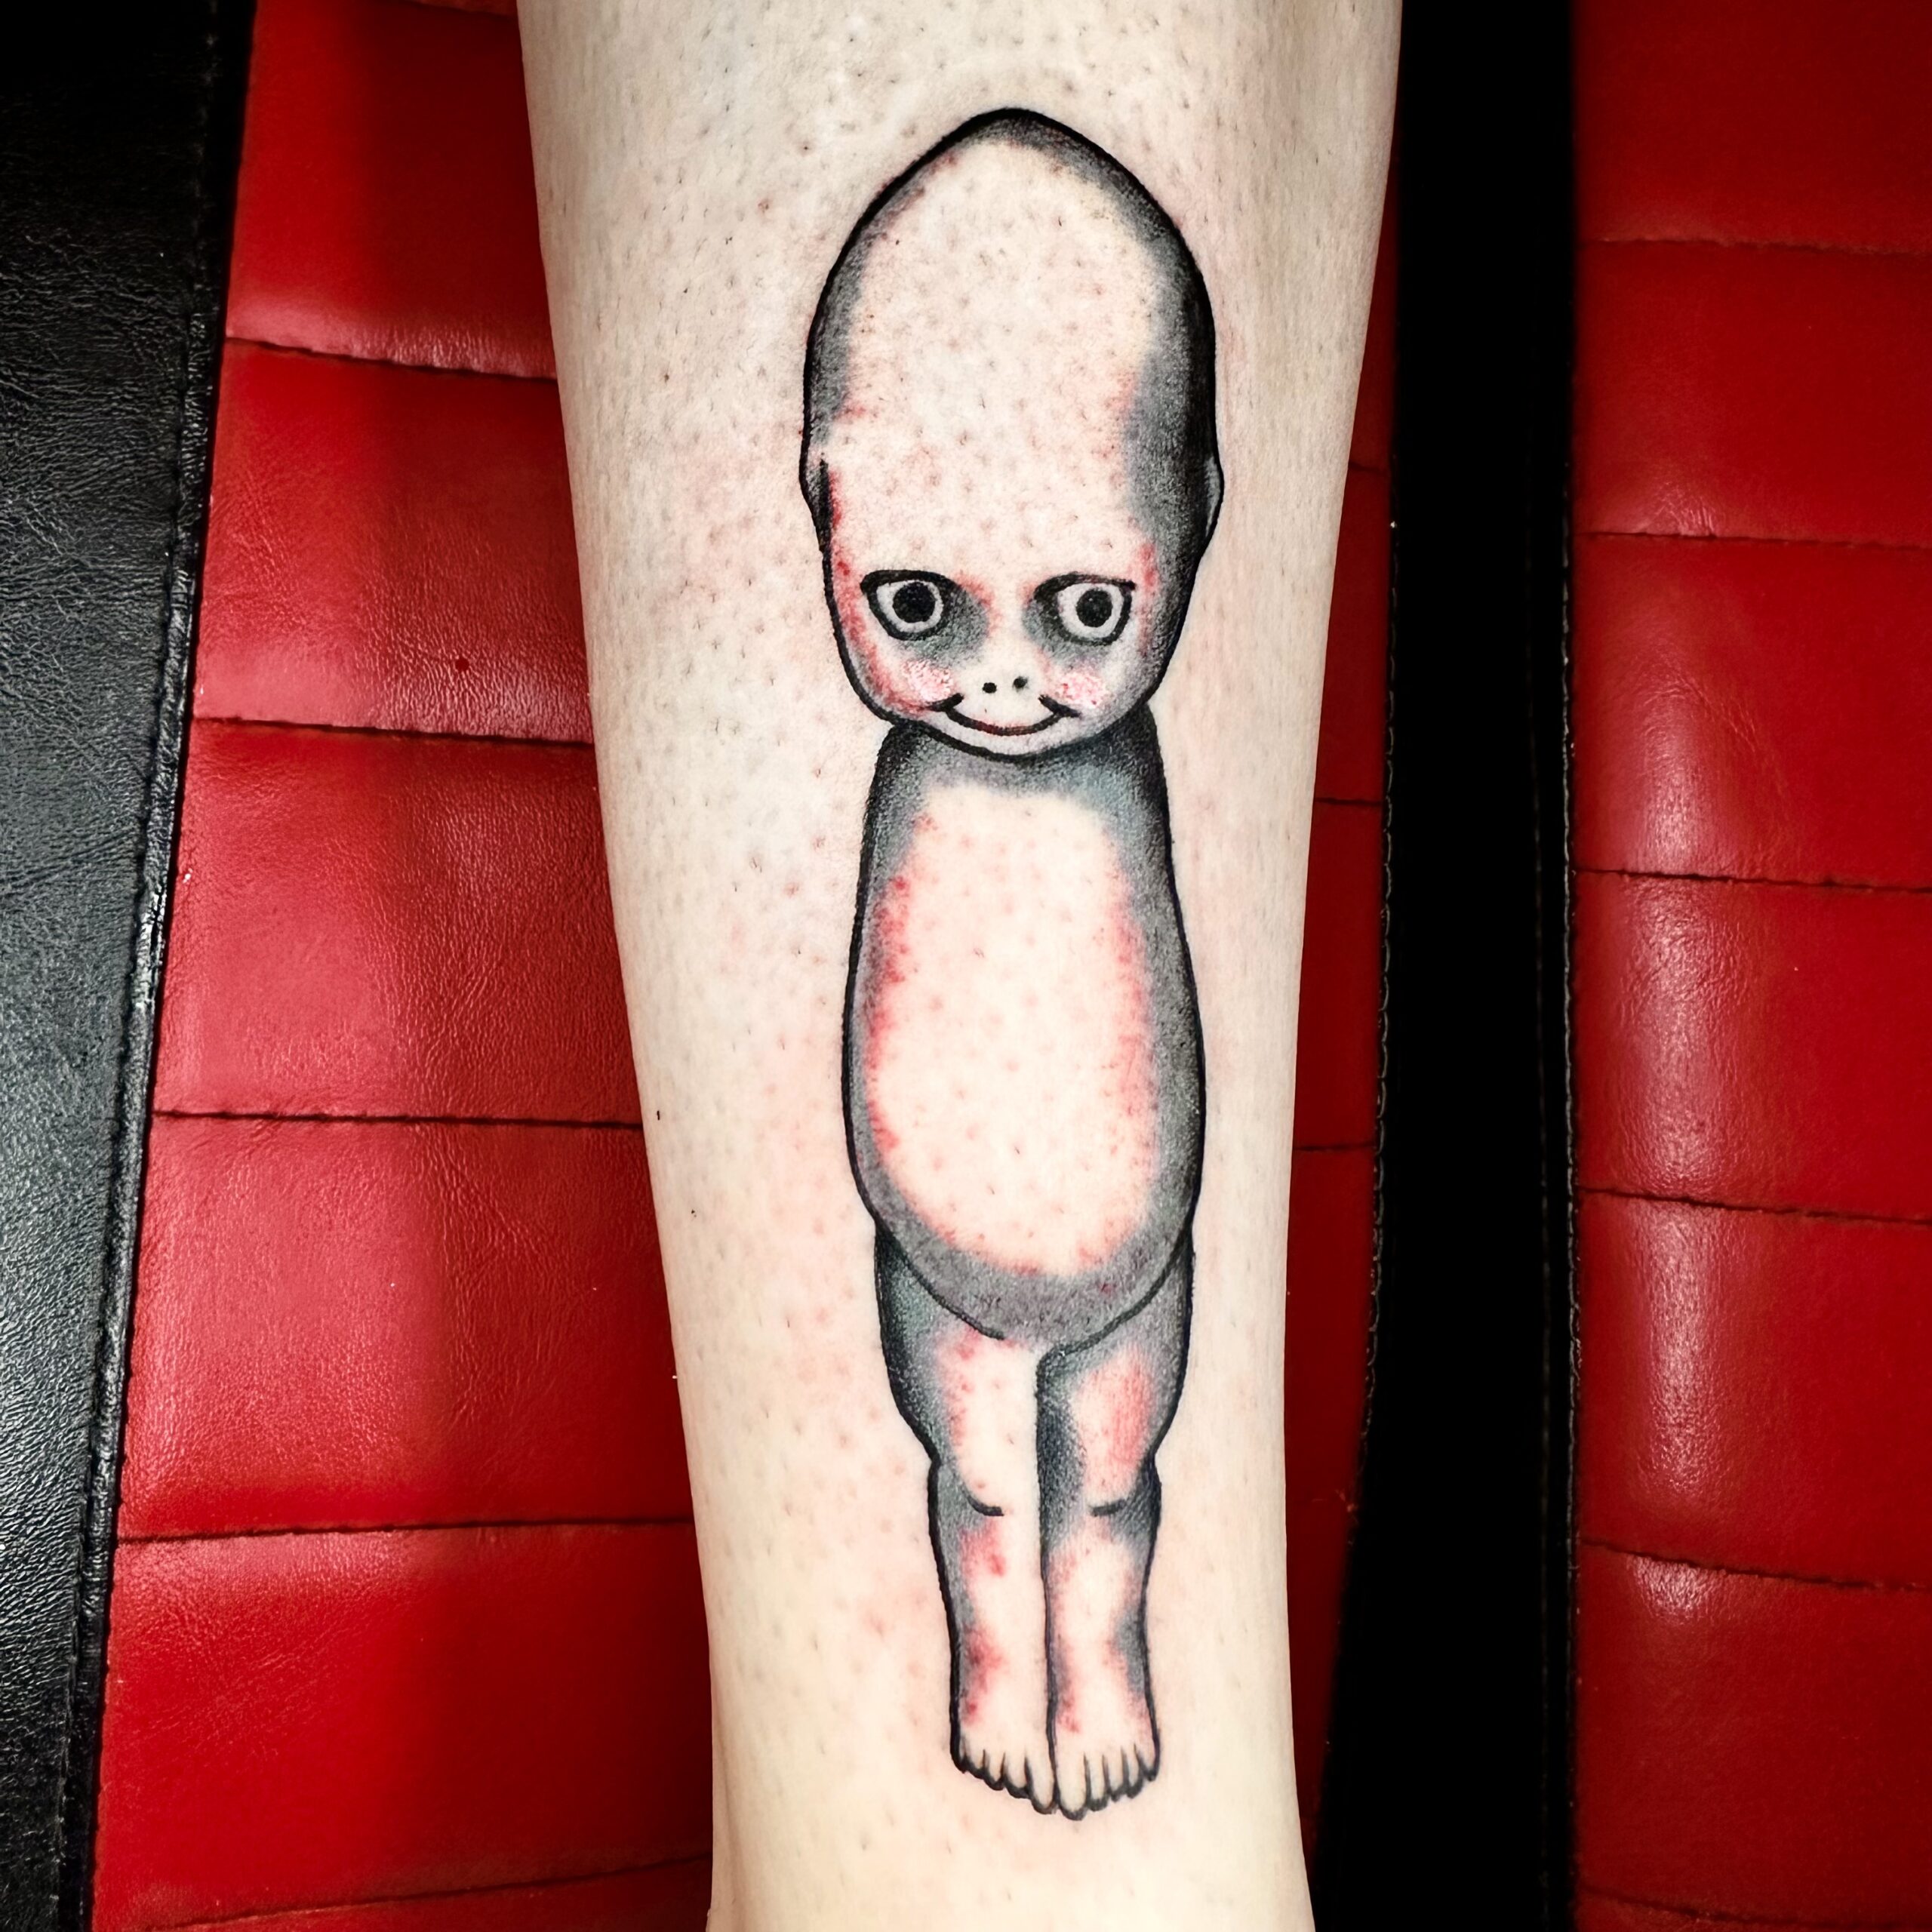 Tattoo of an alien from top Dallas Tattoo shop